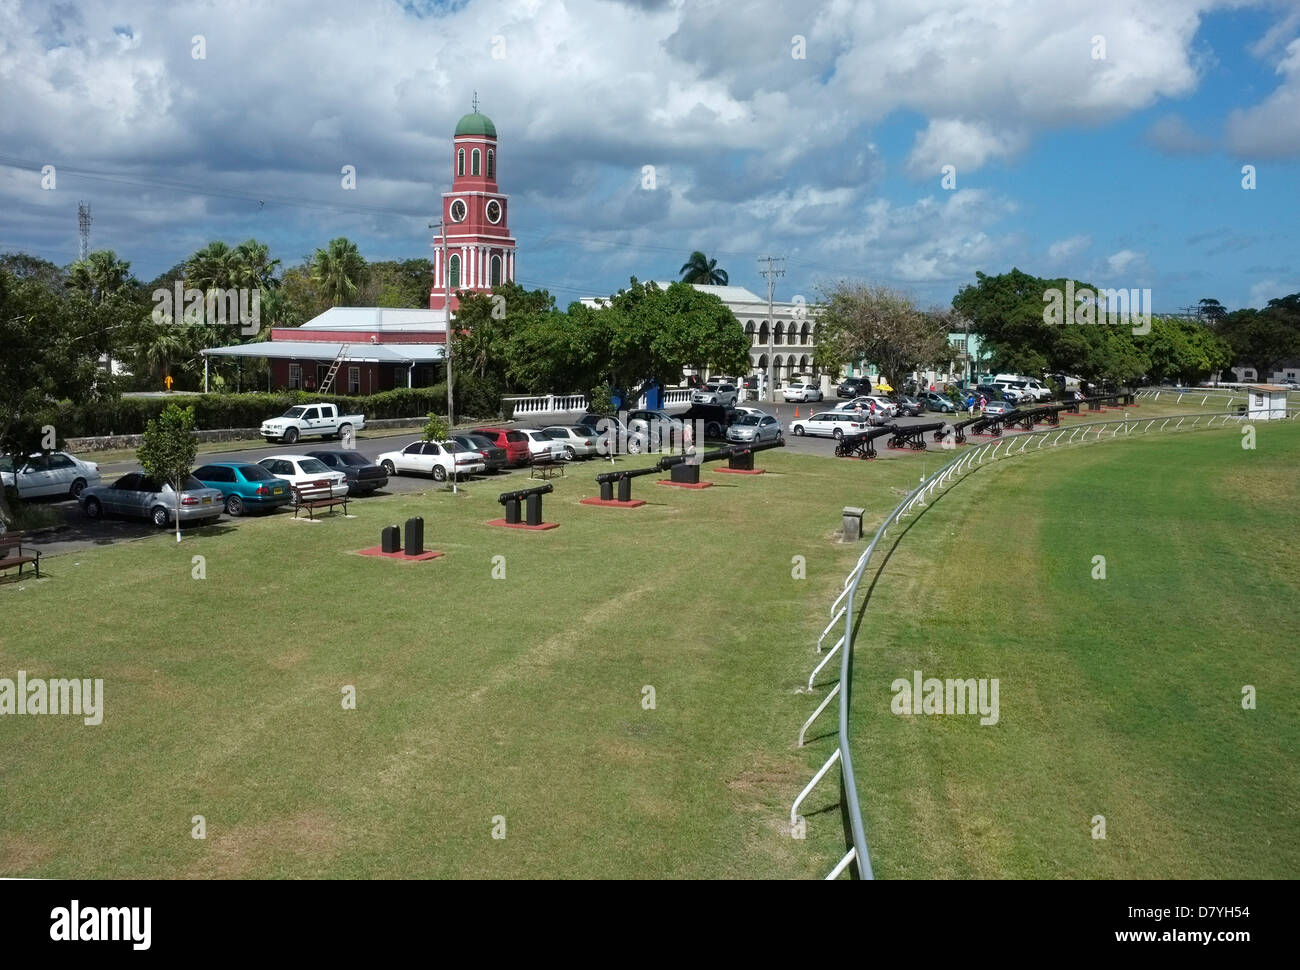 L'Ippodromo al Garrison Savannah, Bridgetown, Barbados, West Indies. Foto Stock